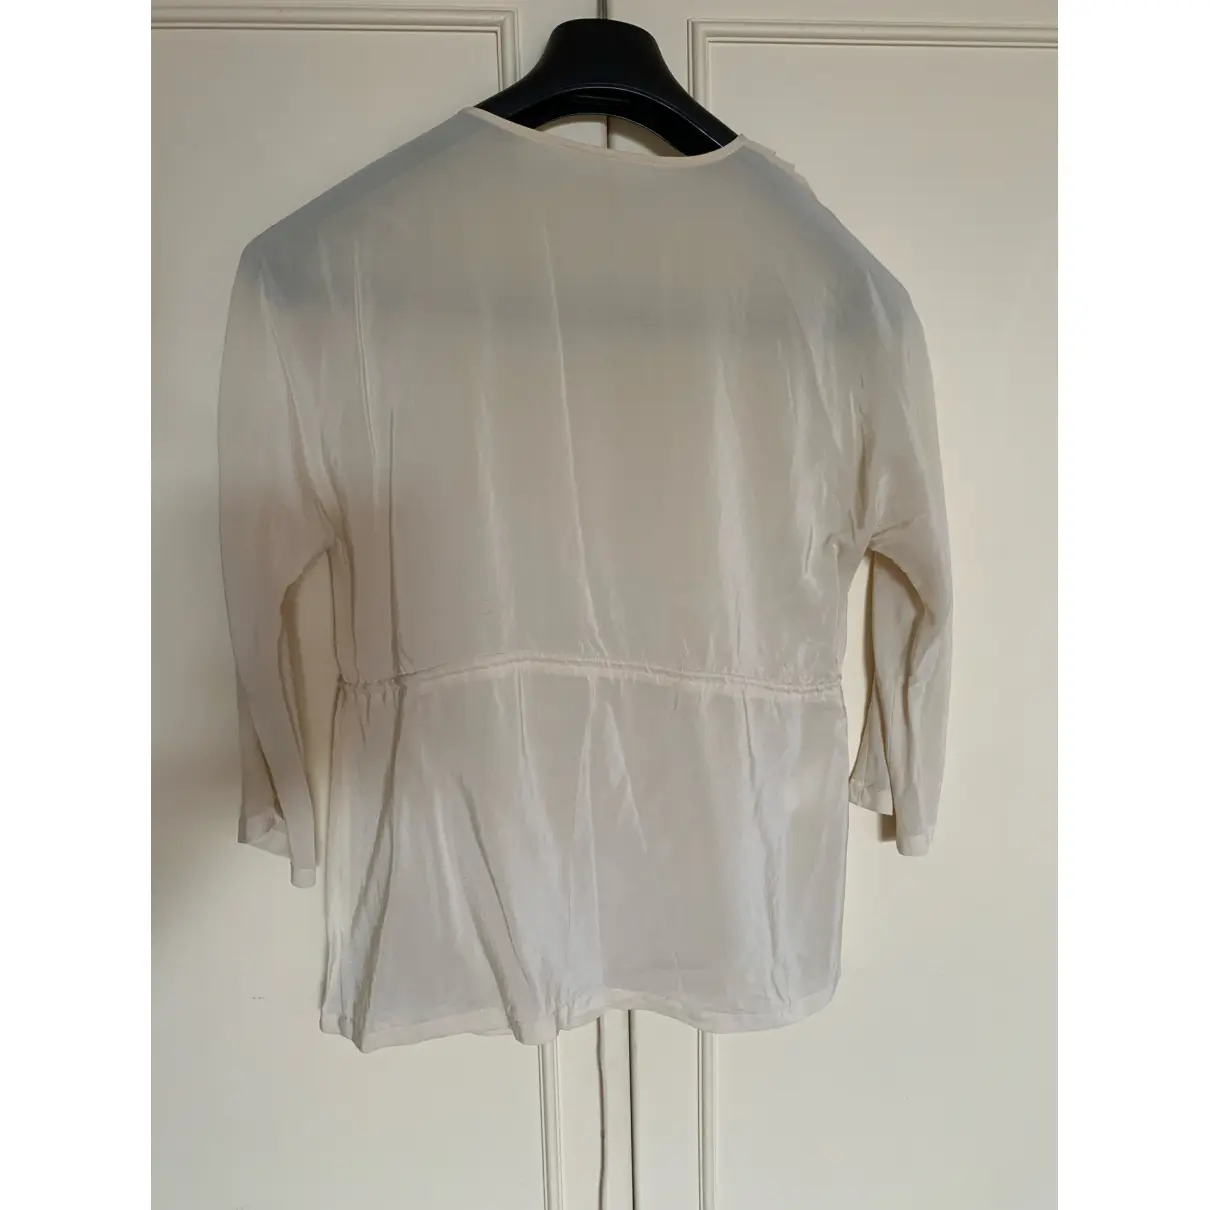 Buy PURIFICACION GARCIA Silk blouse online